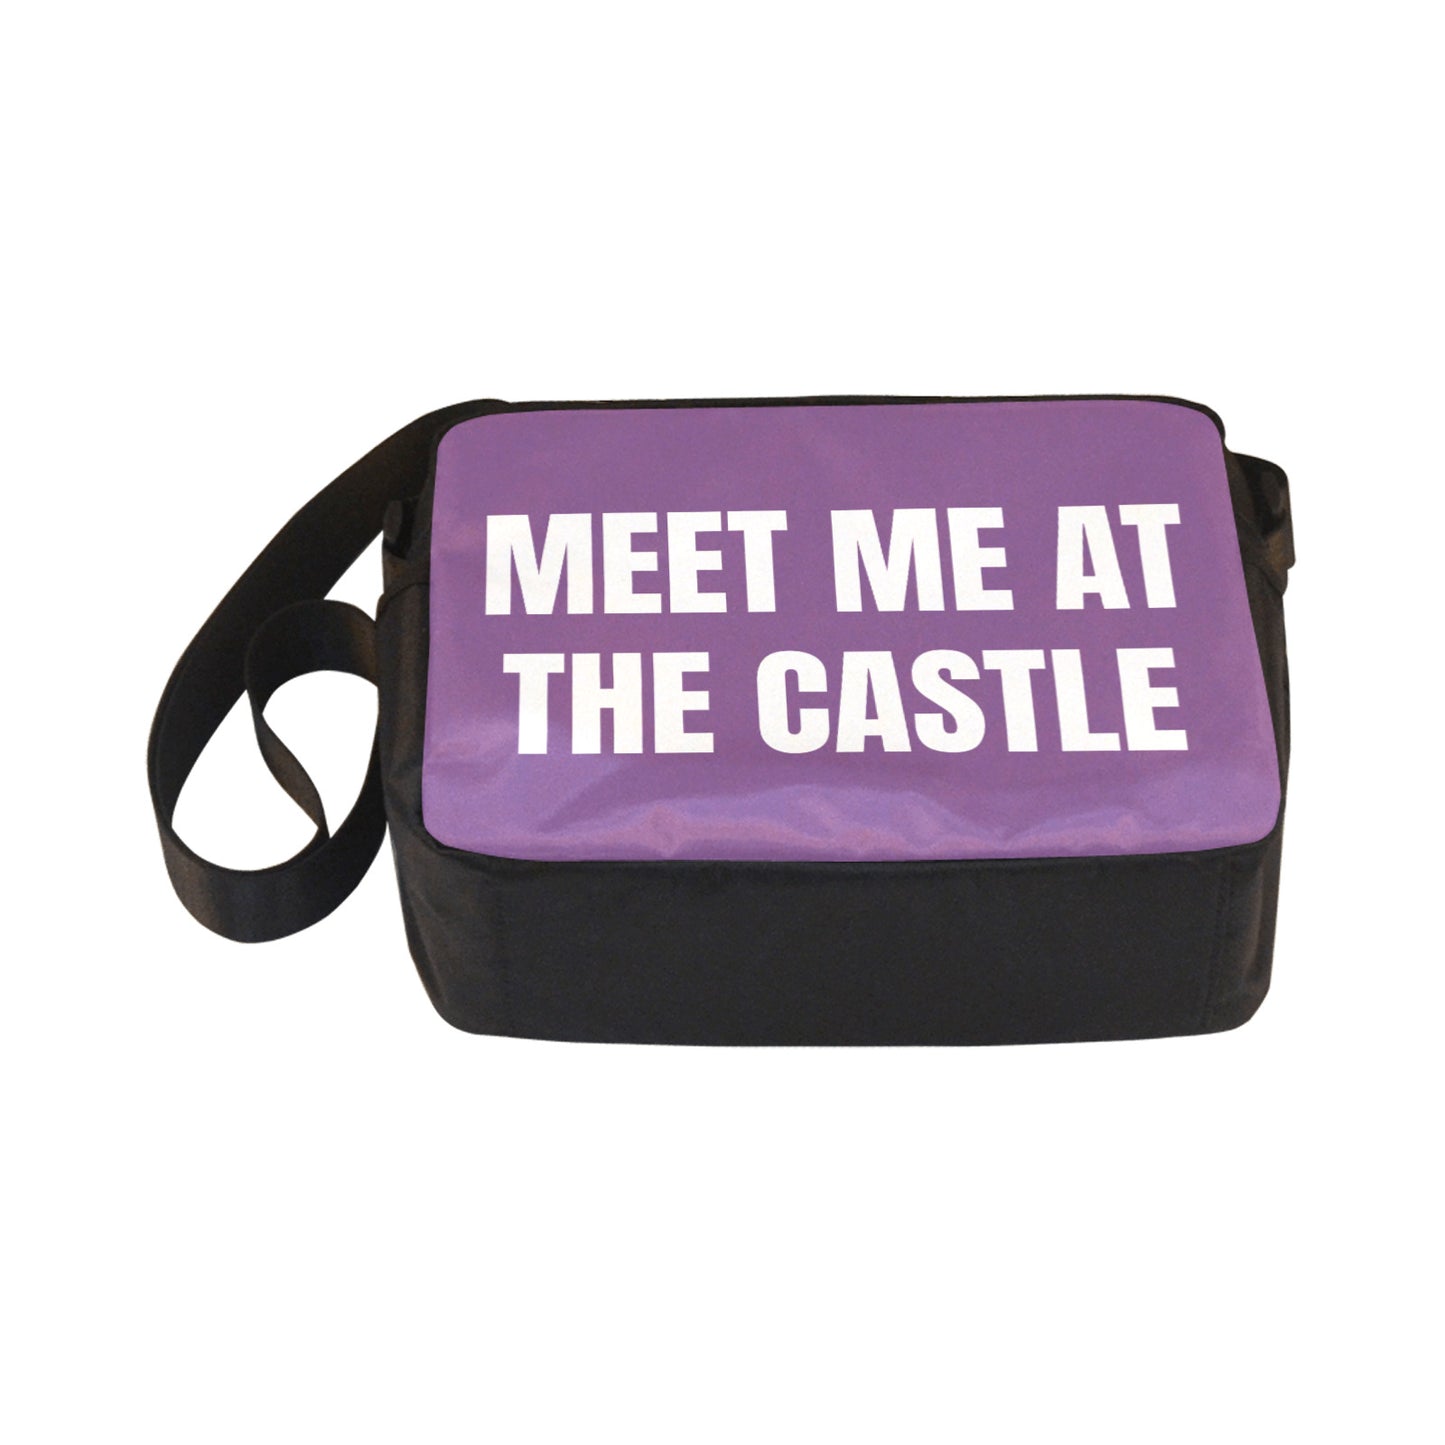 Meet Me At The Castle Purple Classic Cross-body Nylon Bag